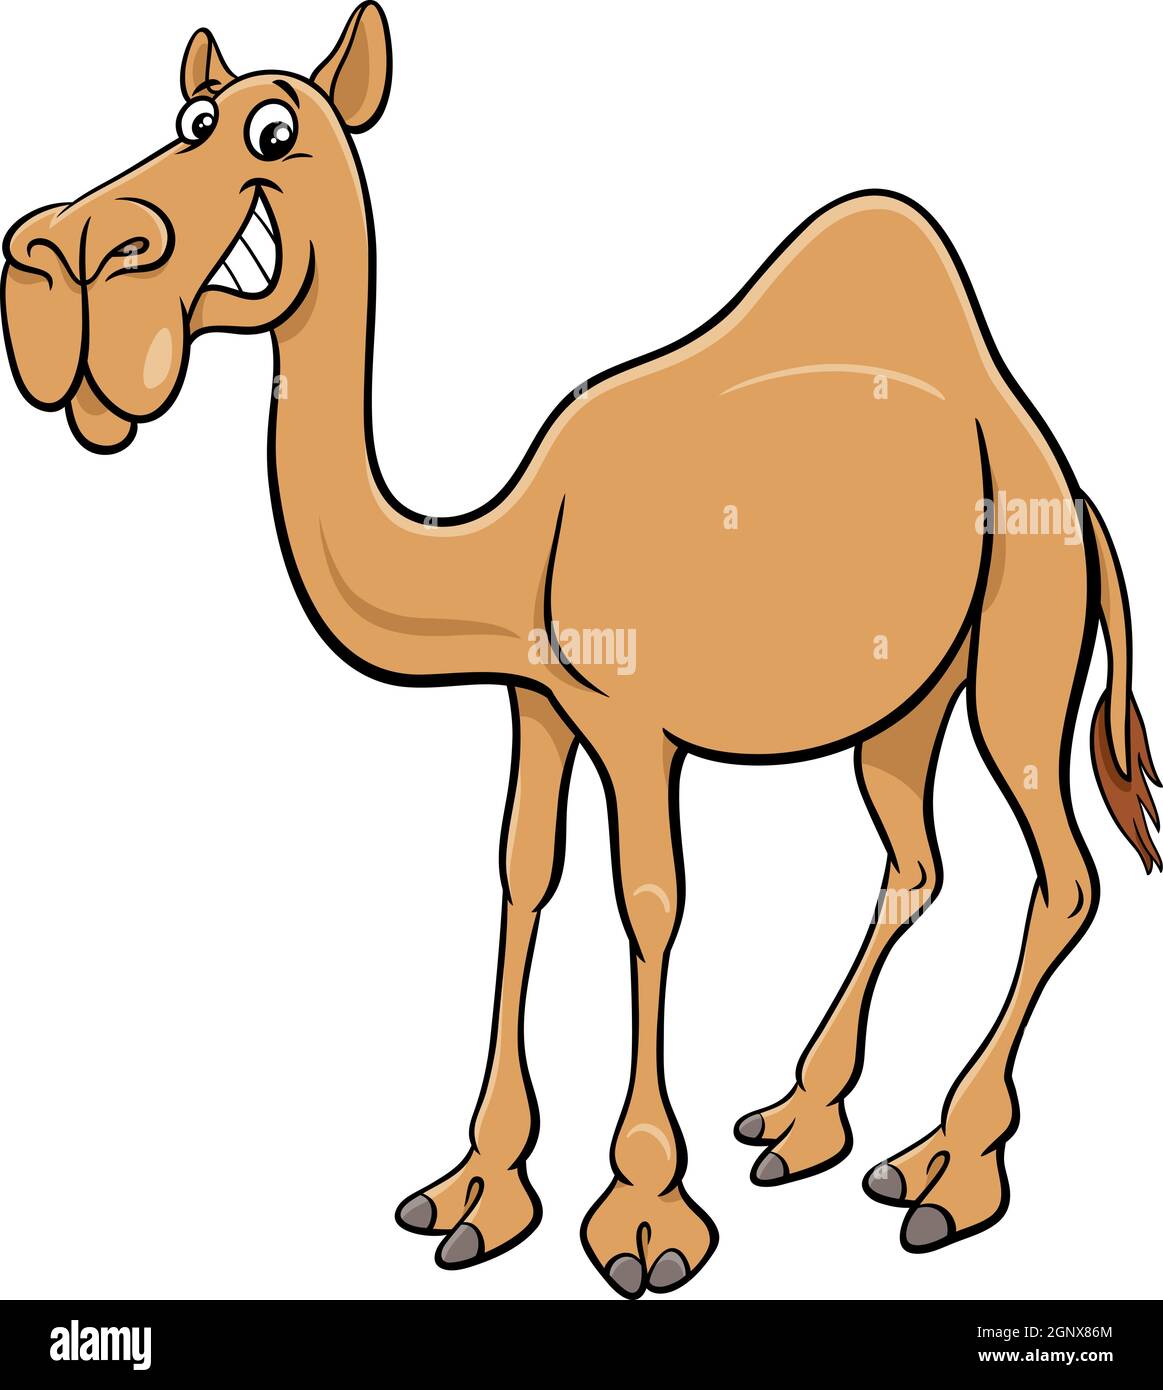 cartoon dromedary camel comic animal character Stock Vector